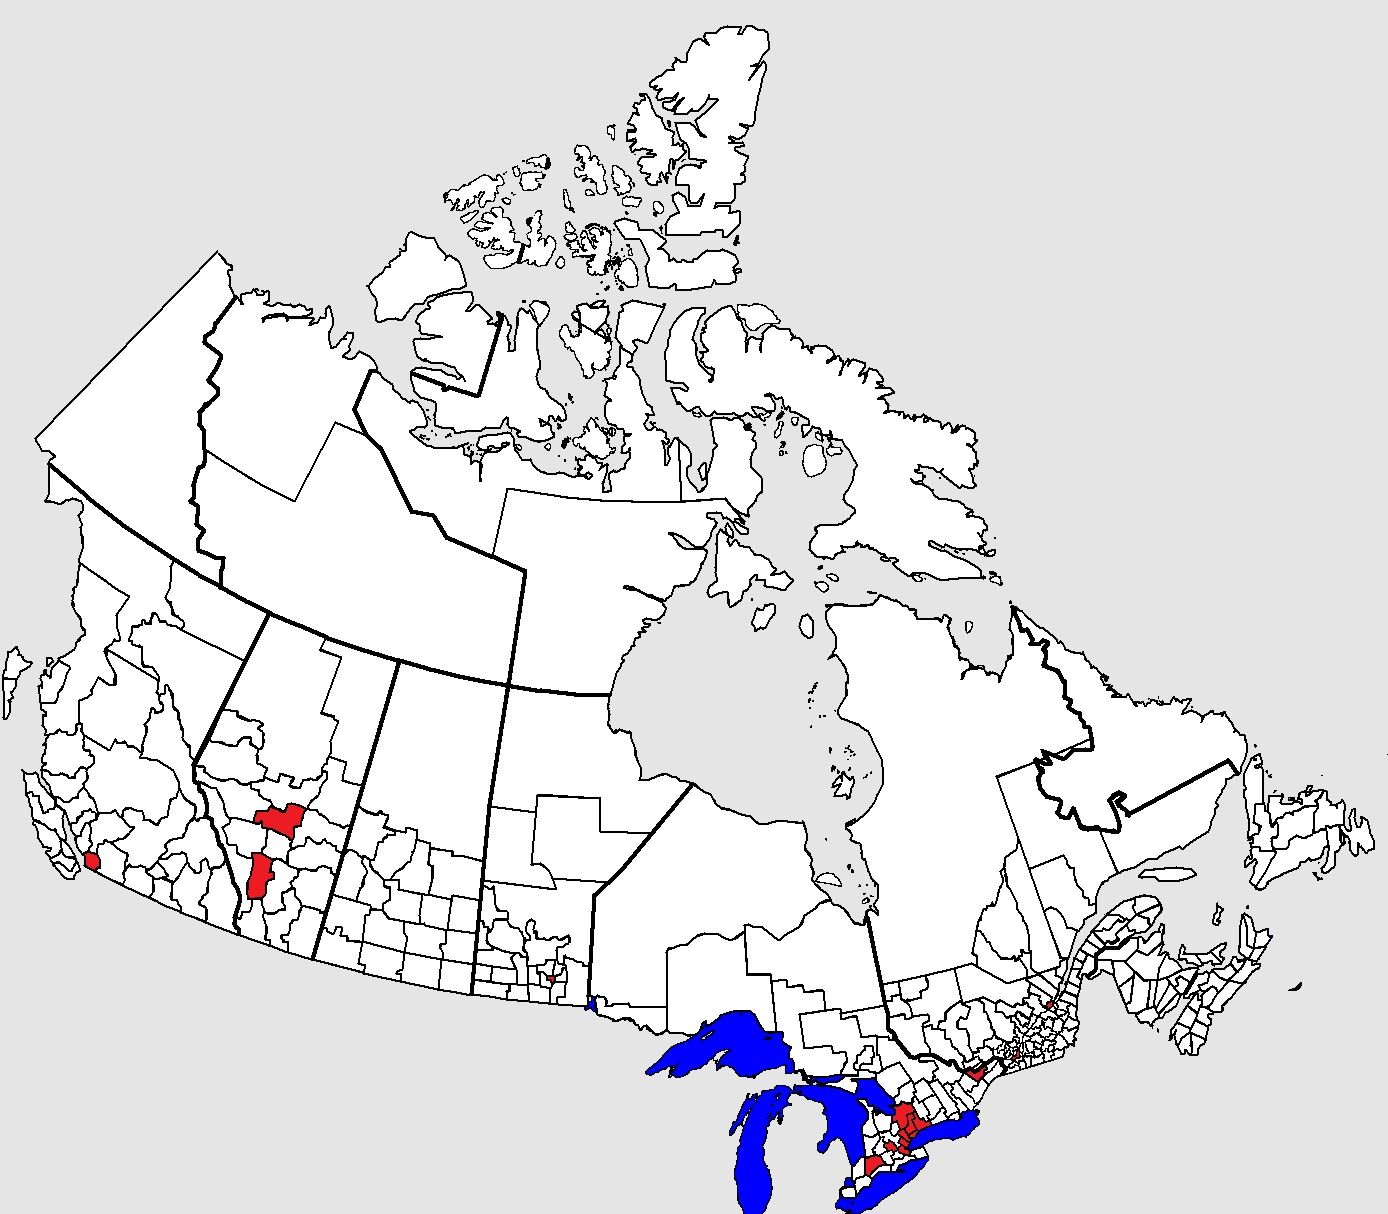 Canada population density map